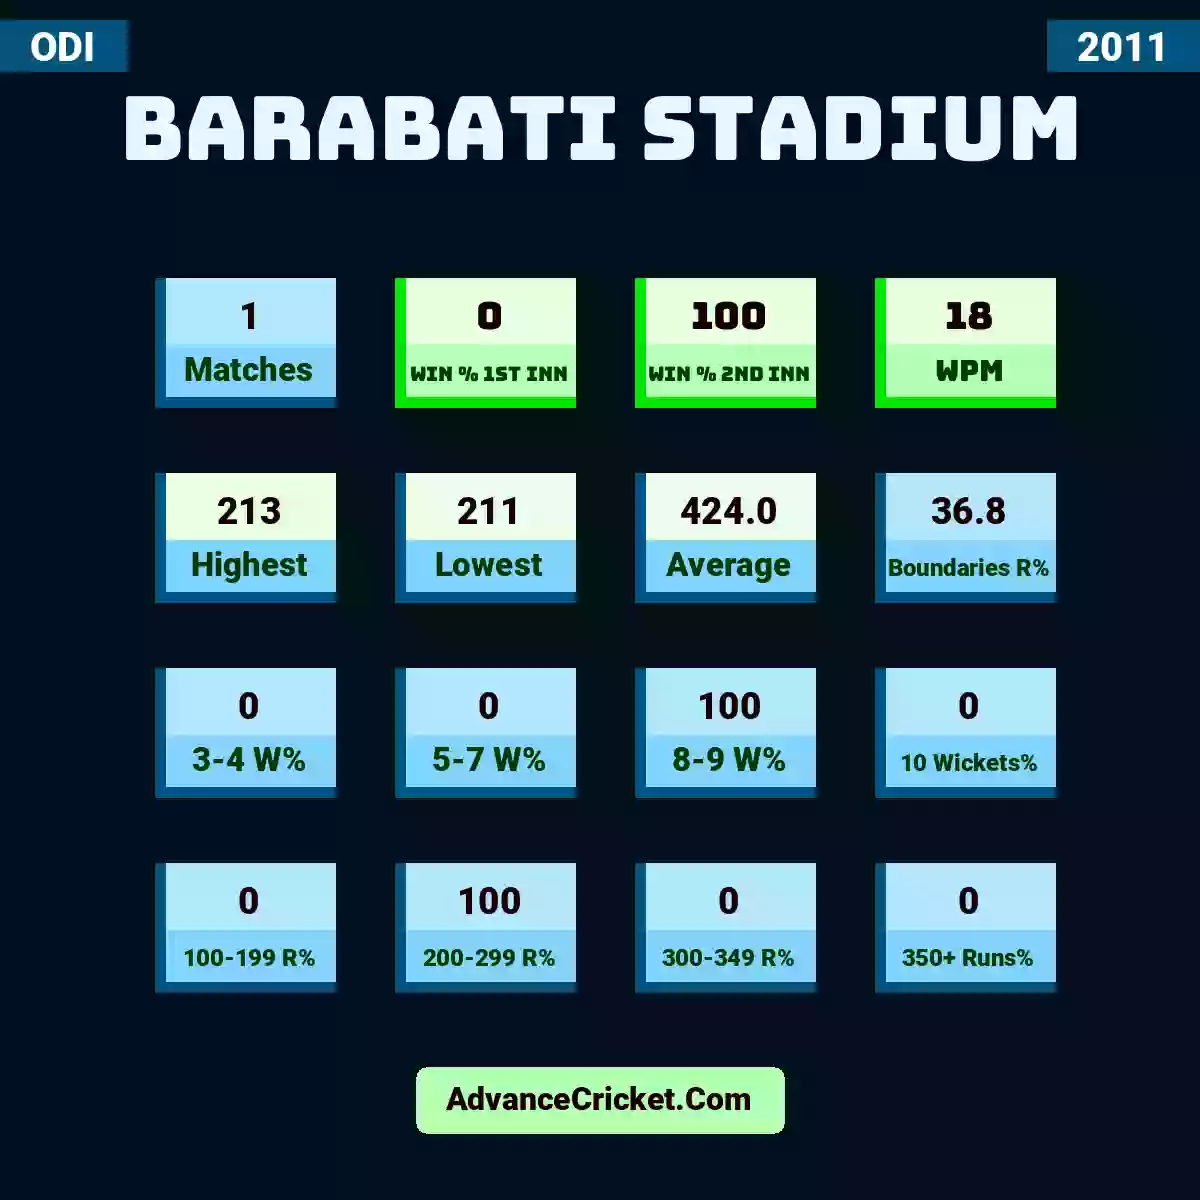 Image showing Barabati Stadium with Matches: 1, Win % 1st Inn: 0, Win % 2nd Inn: 100, WPM: 18, Highest: 213, Lowest: 211, Average: 424.0, Boundaries R%: 36.8, 3-4 W%: 0, 5-7 W%: 0, 8-9 W%: 100, 10 Wickets%: 0, 100-199 R%: 0, 200-299 R%: 100, 300-349 R%: 0, 350+ Runs%: 0.